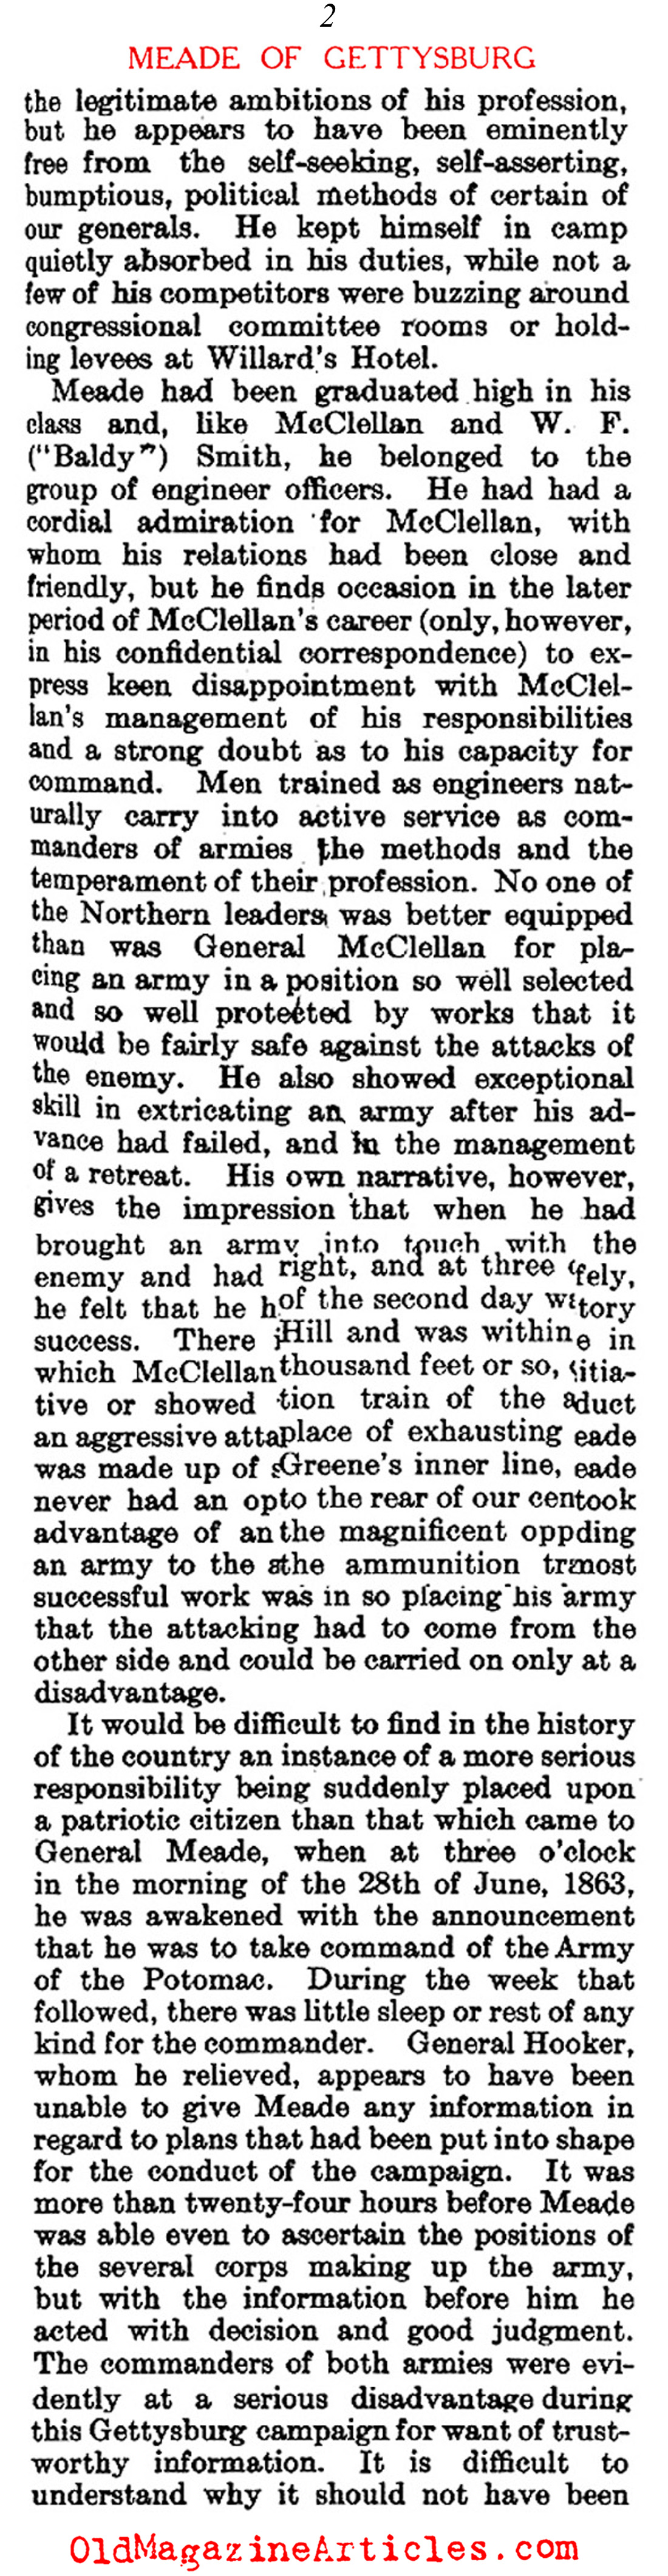 The Career of General George Gordon Meade (Literary Digest, 1912)